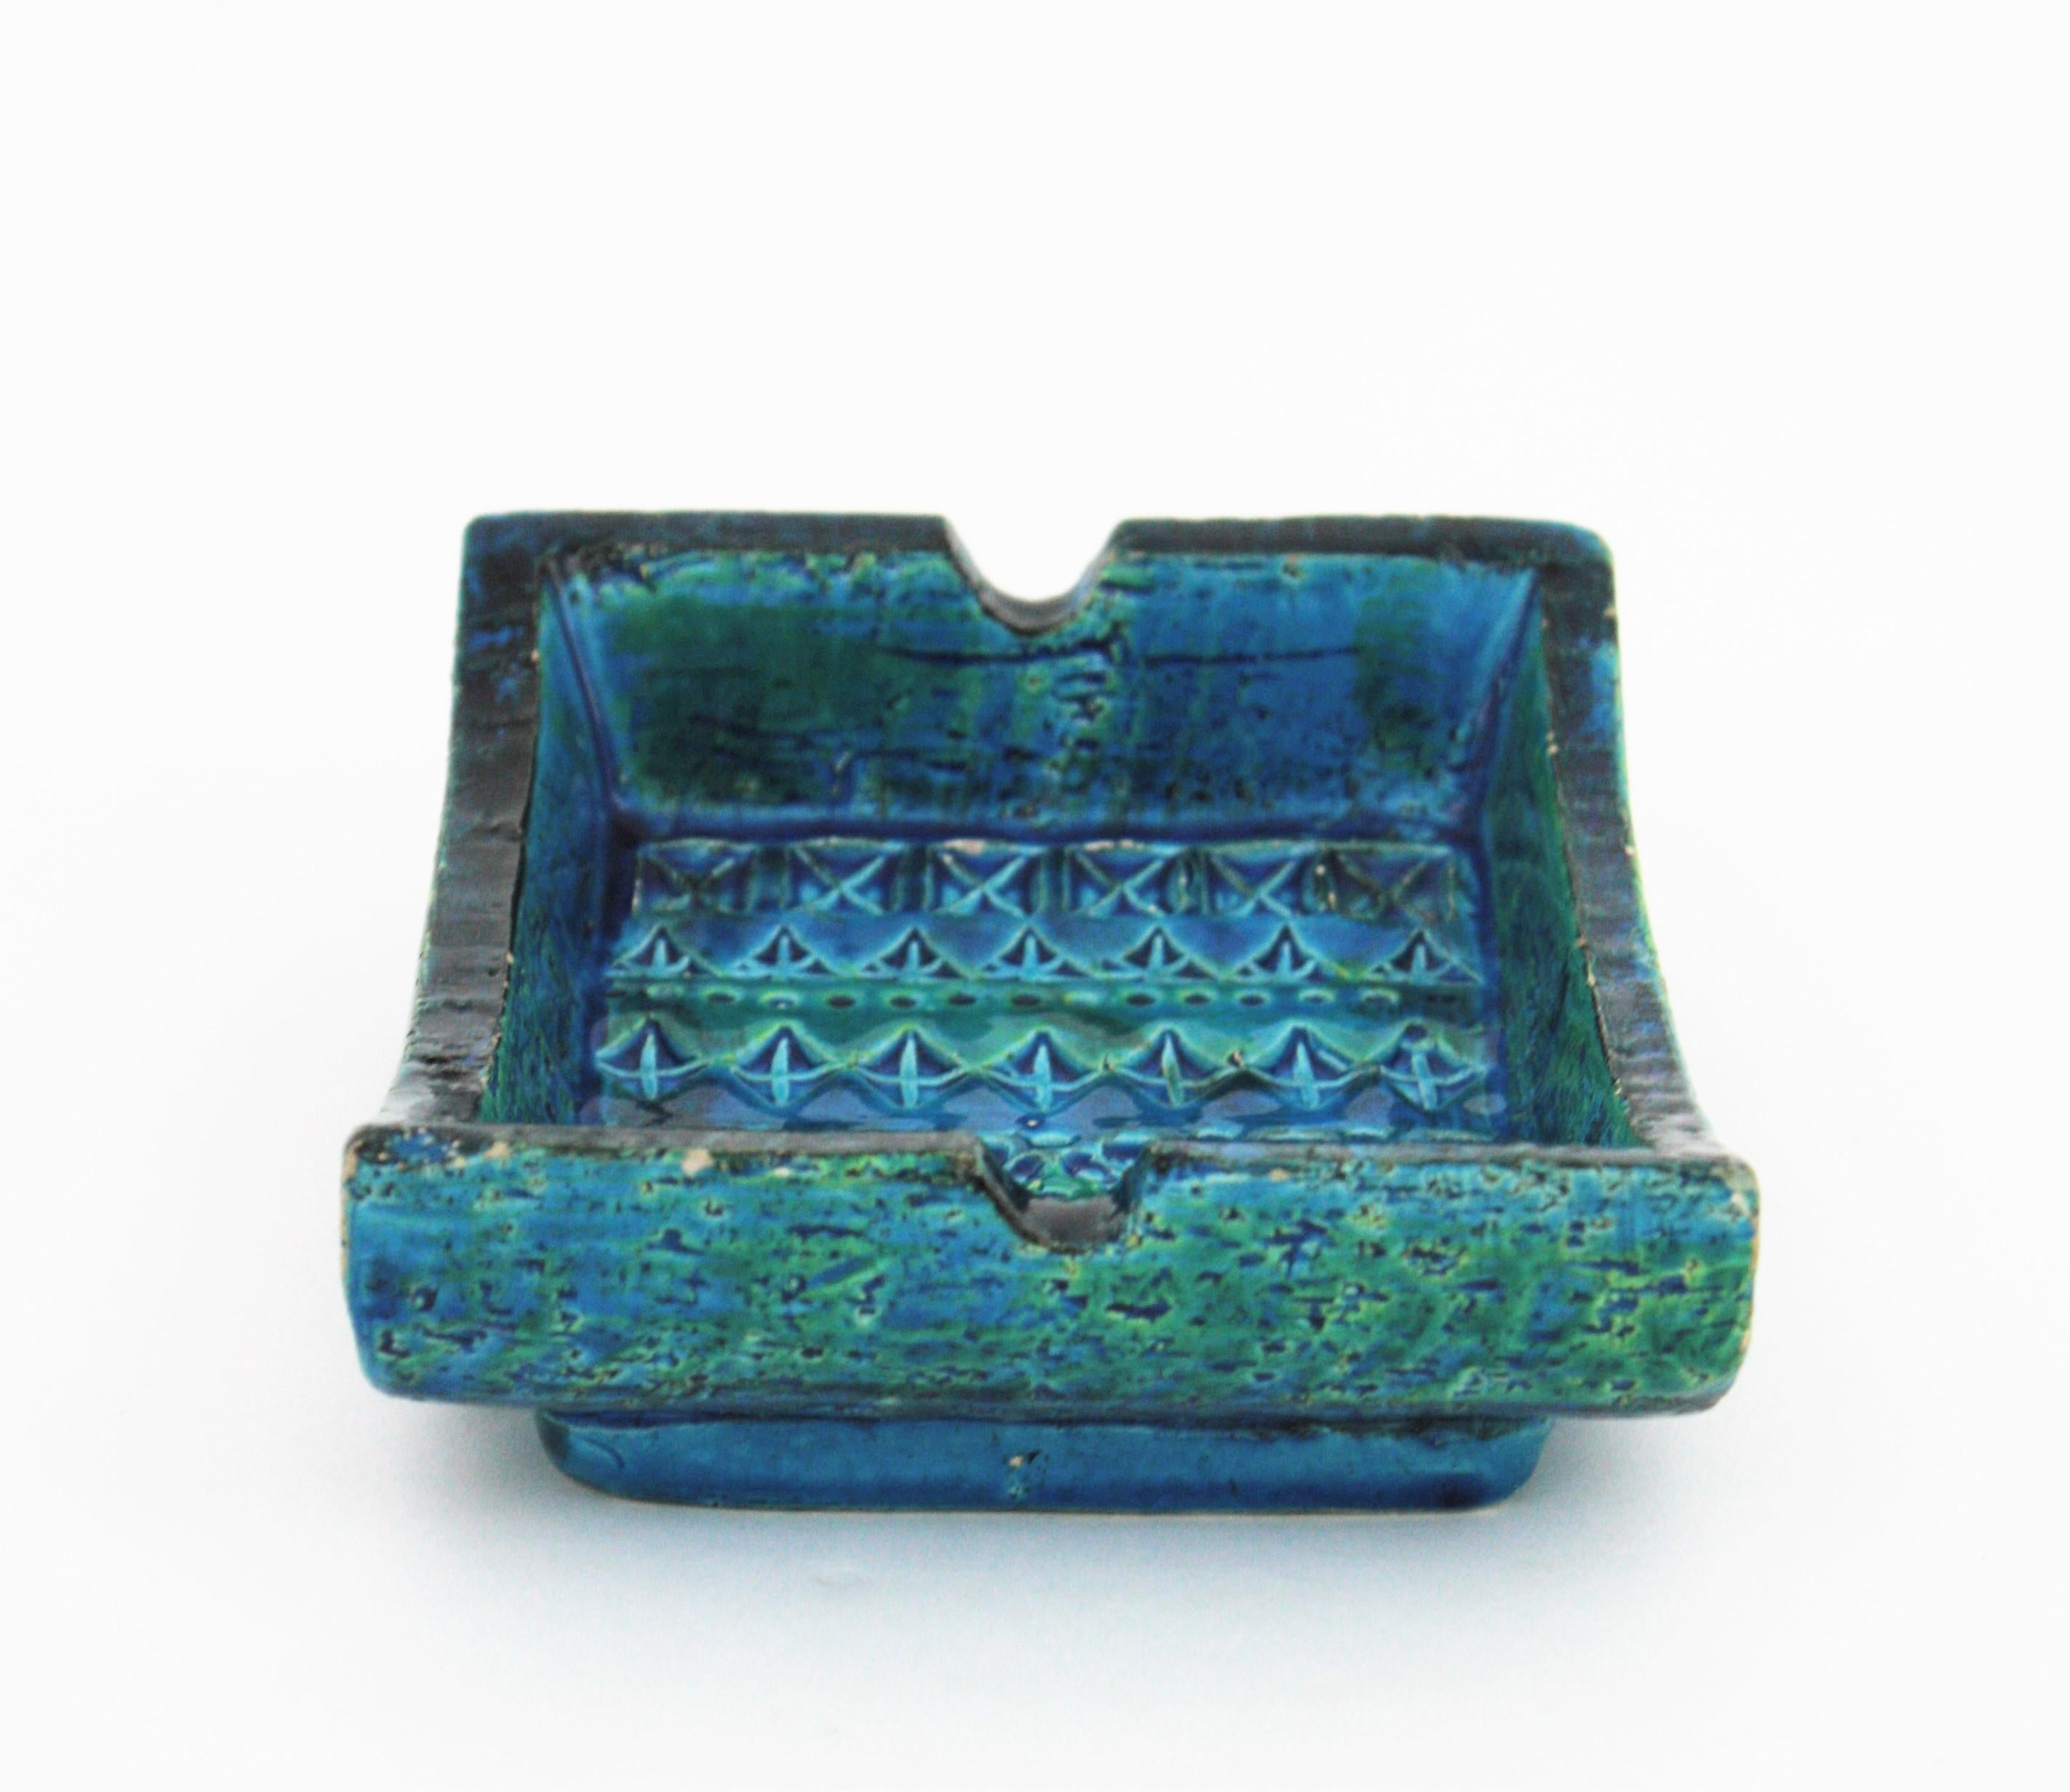 Aldo Londi Bitossi Rimini Blue Glazed Ceramic Rectangular Ashtray Bowl Videpoche In Good Condition For Sale In Barcelona, ES